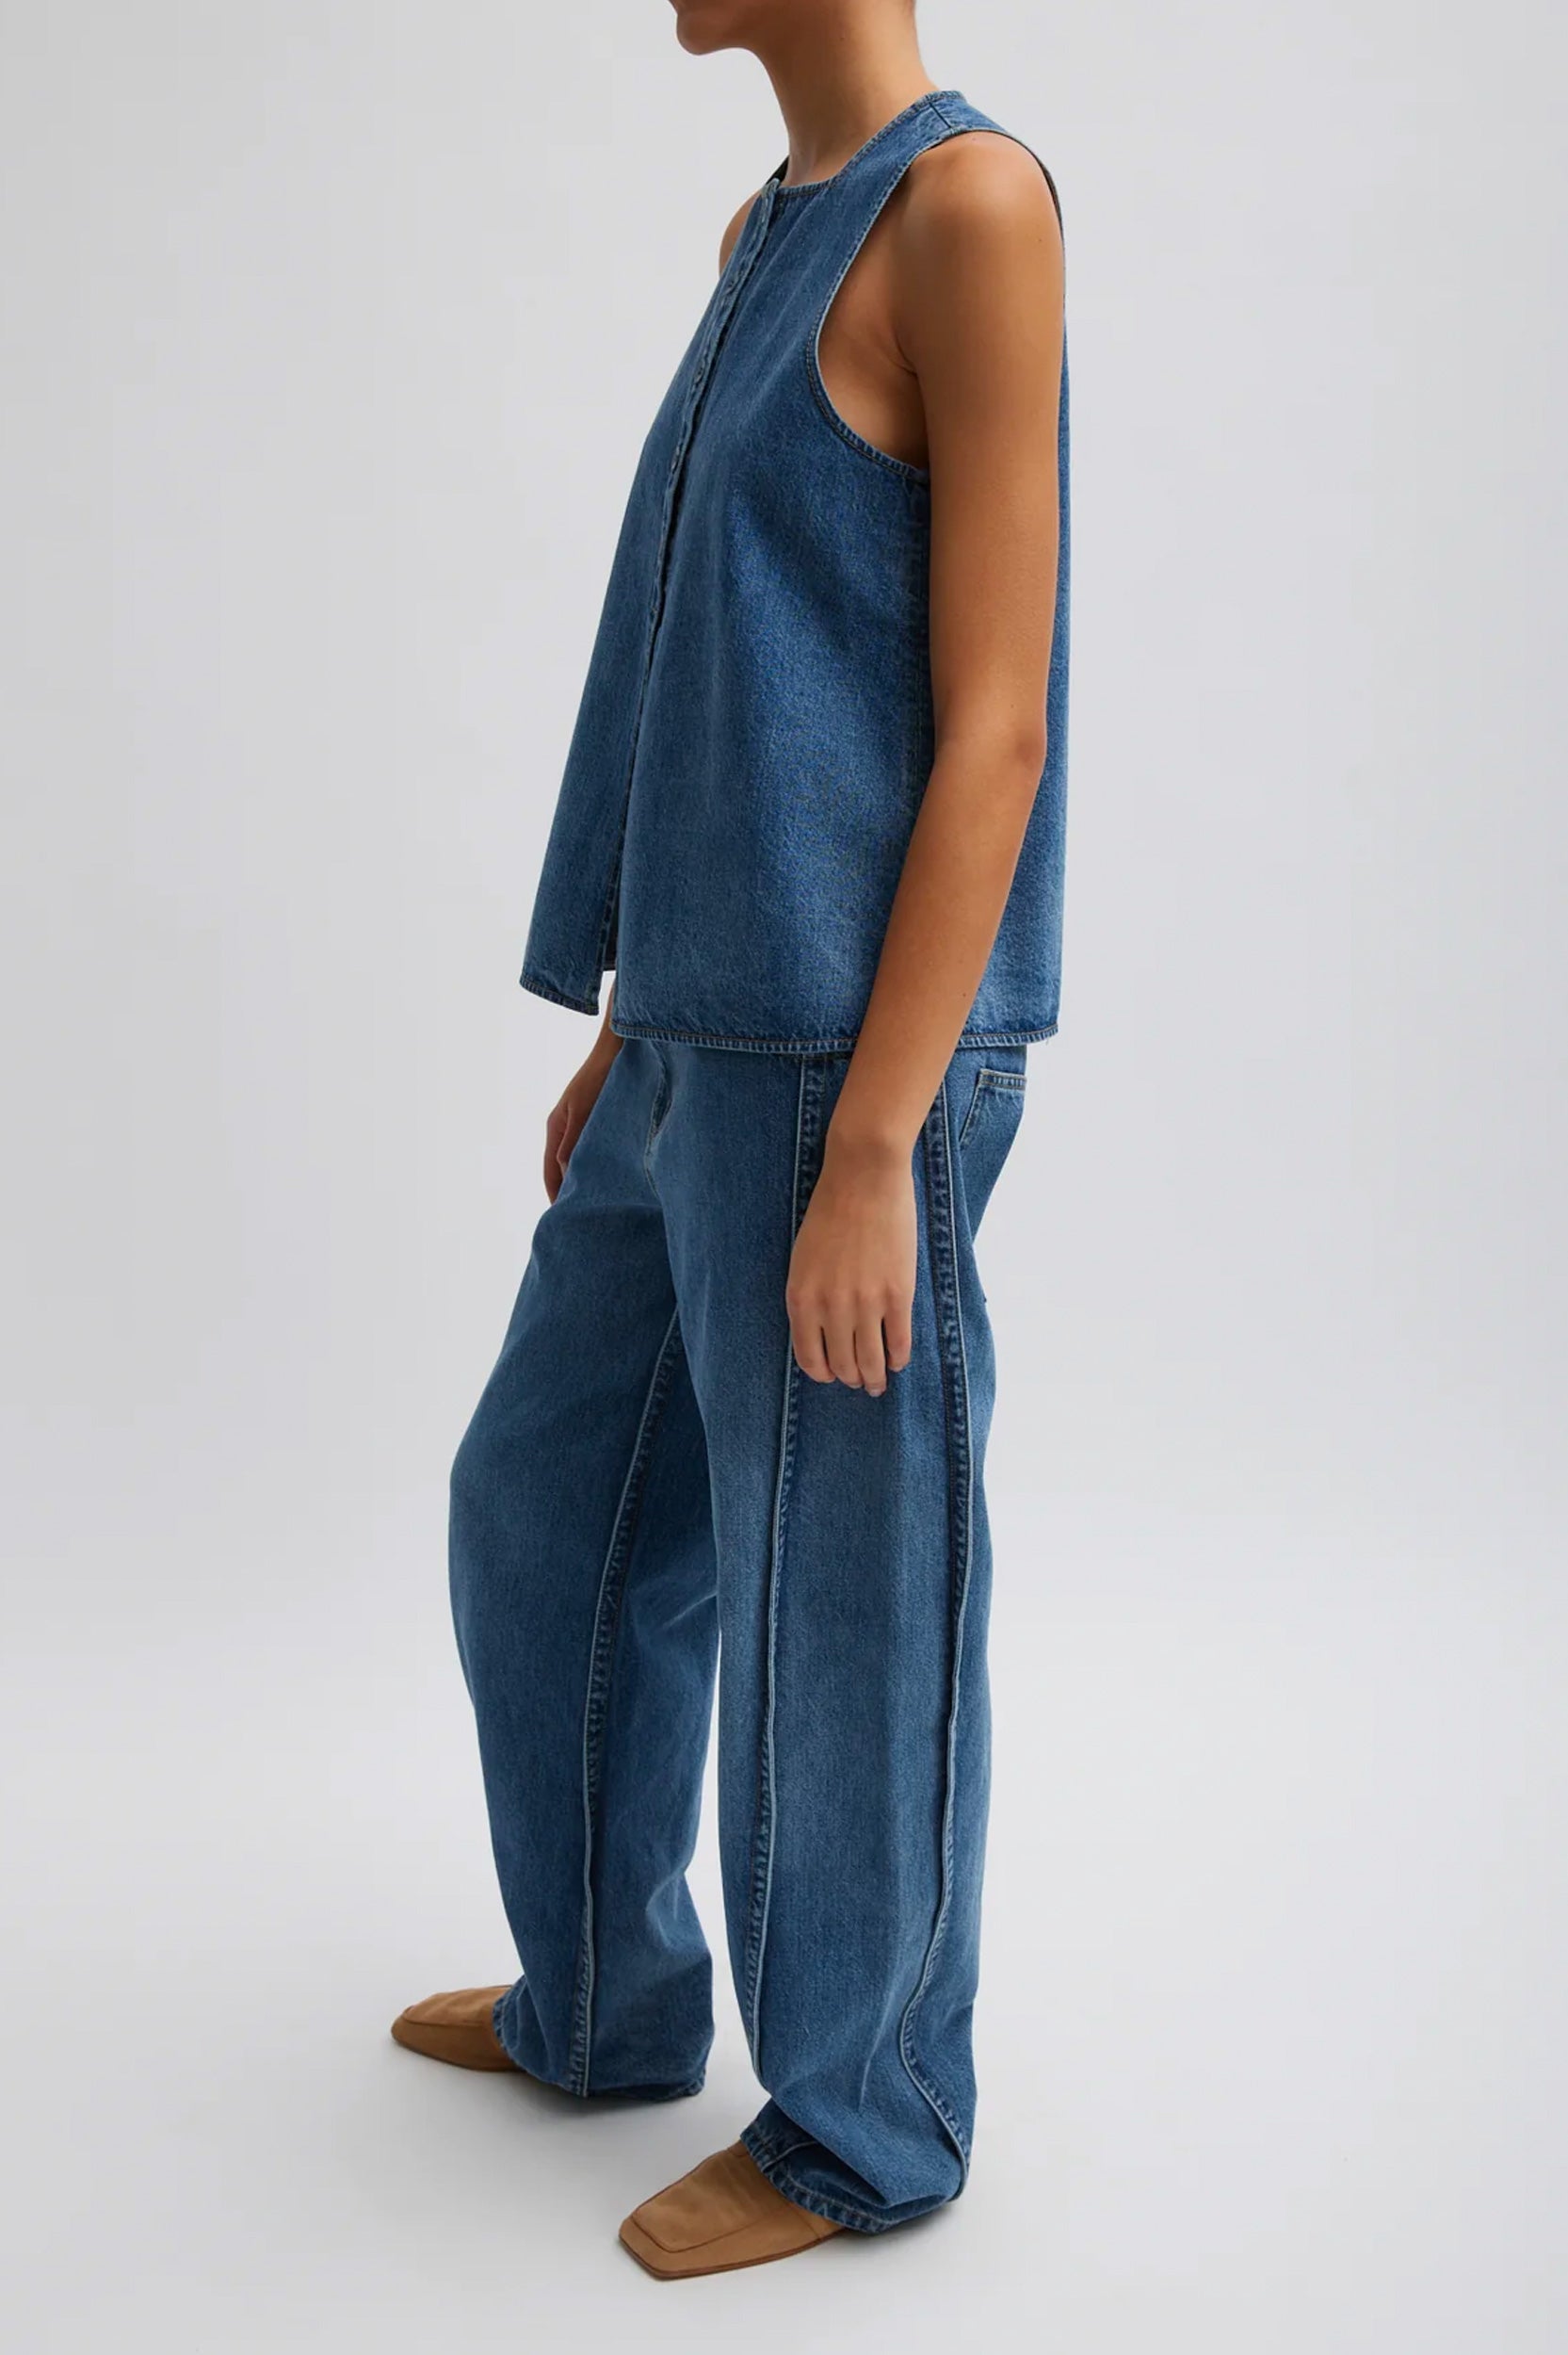 Spring Denim Tuck Jean in Classic Blue - Short